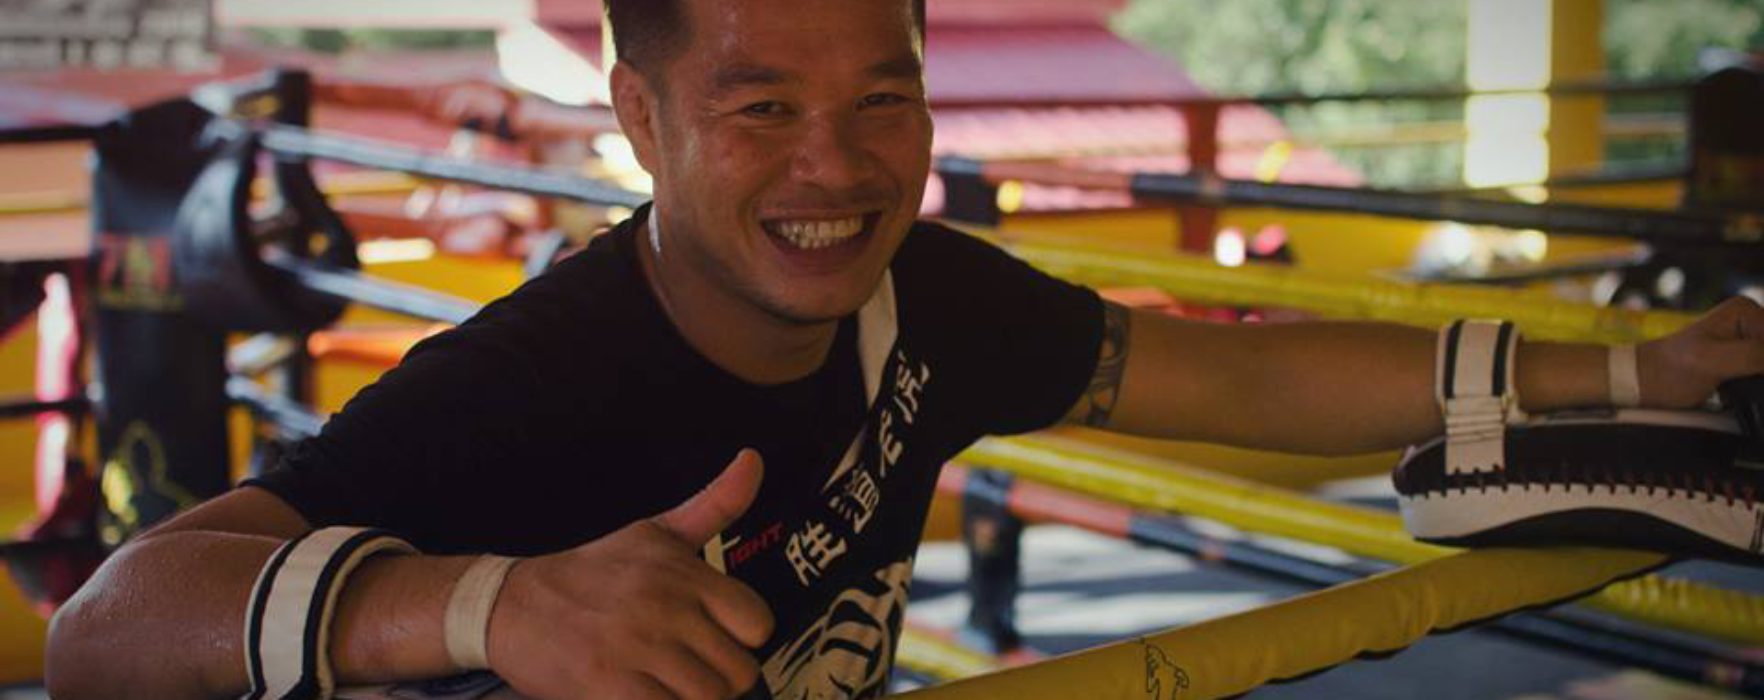 (Italiano) “Meet kru Tid”: un istruttore thailandese nel Bel Paese